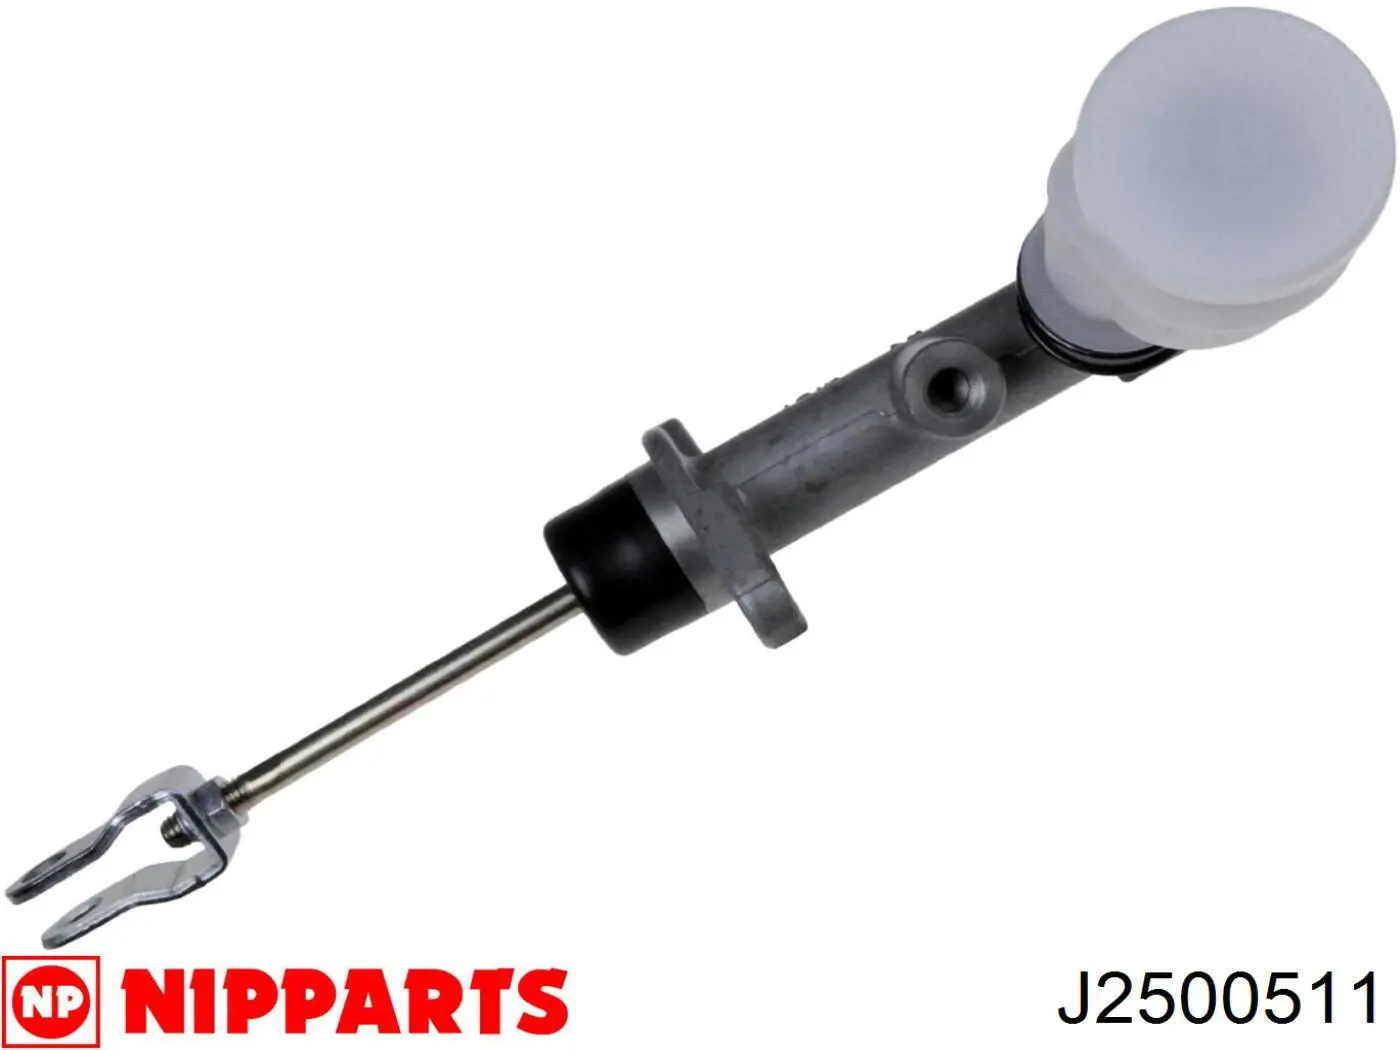 J2500511 Nipparts cilindro maestro de embrague